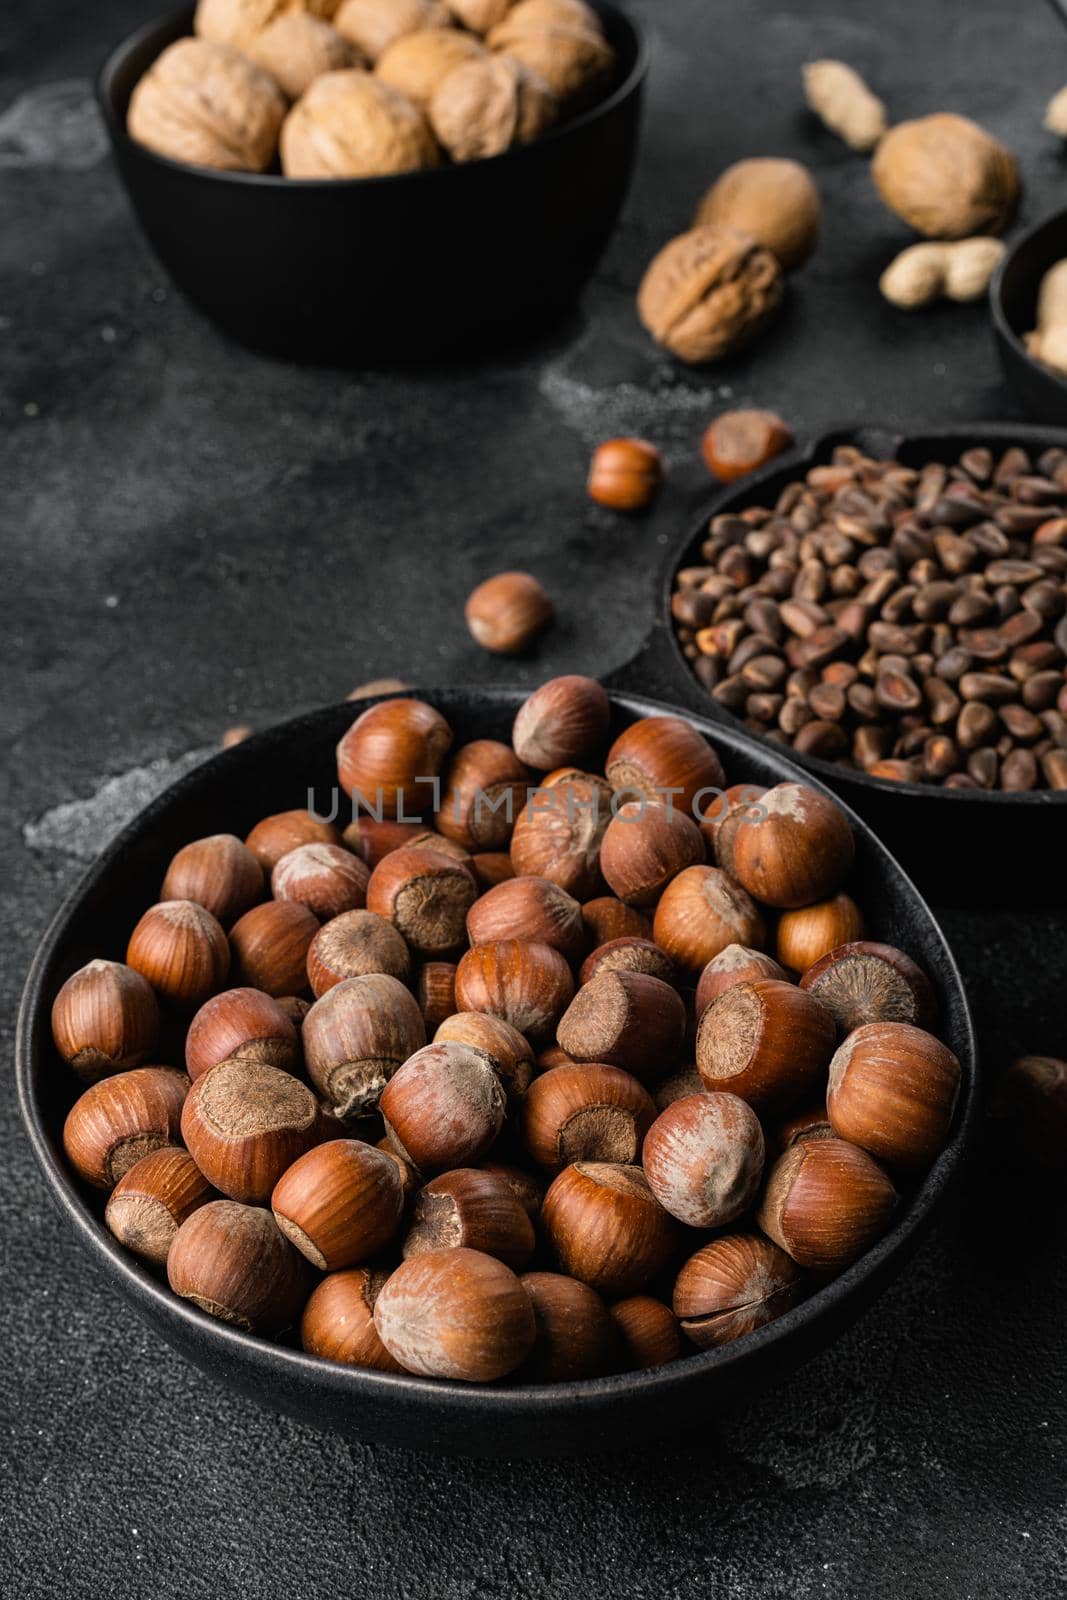 Organic Hazelnut whole nuts, on black dark stone table background by Ilianesolenyi